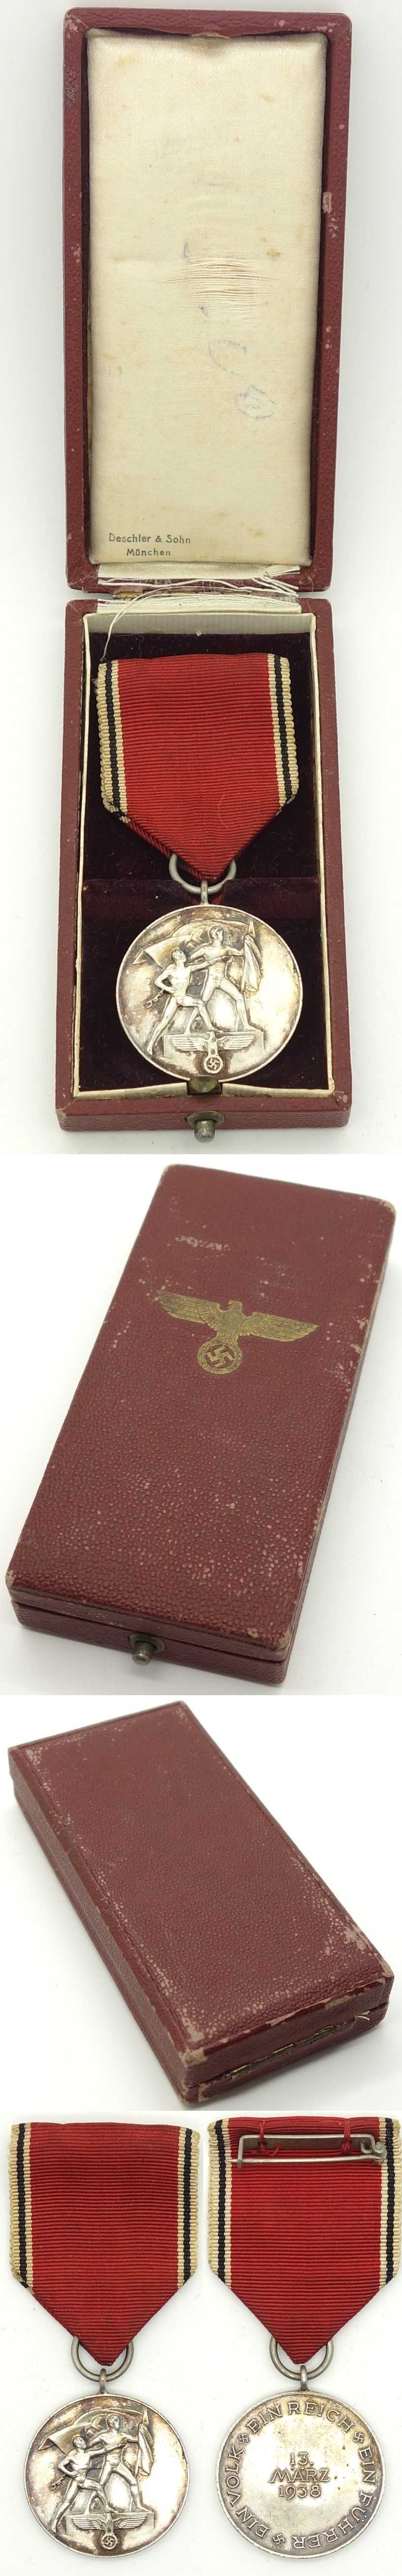 Cased Anschluss Commemorative Medal by Deschler